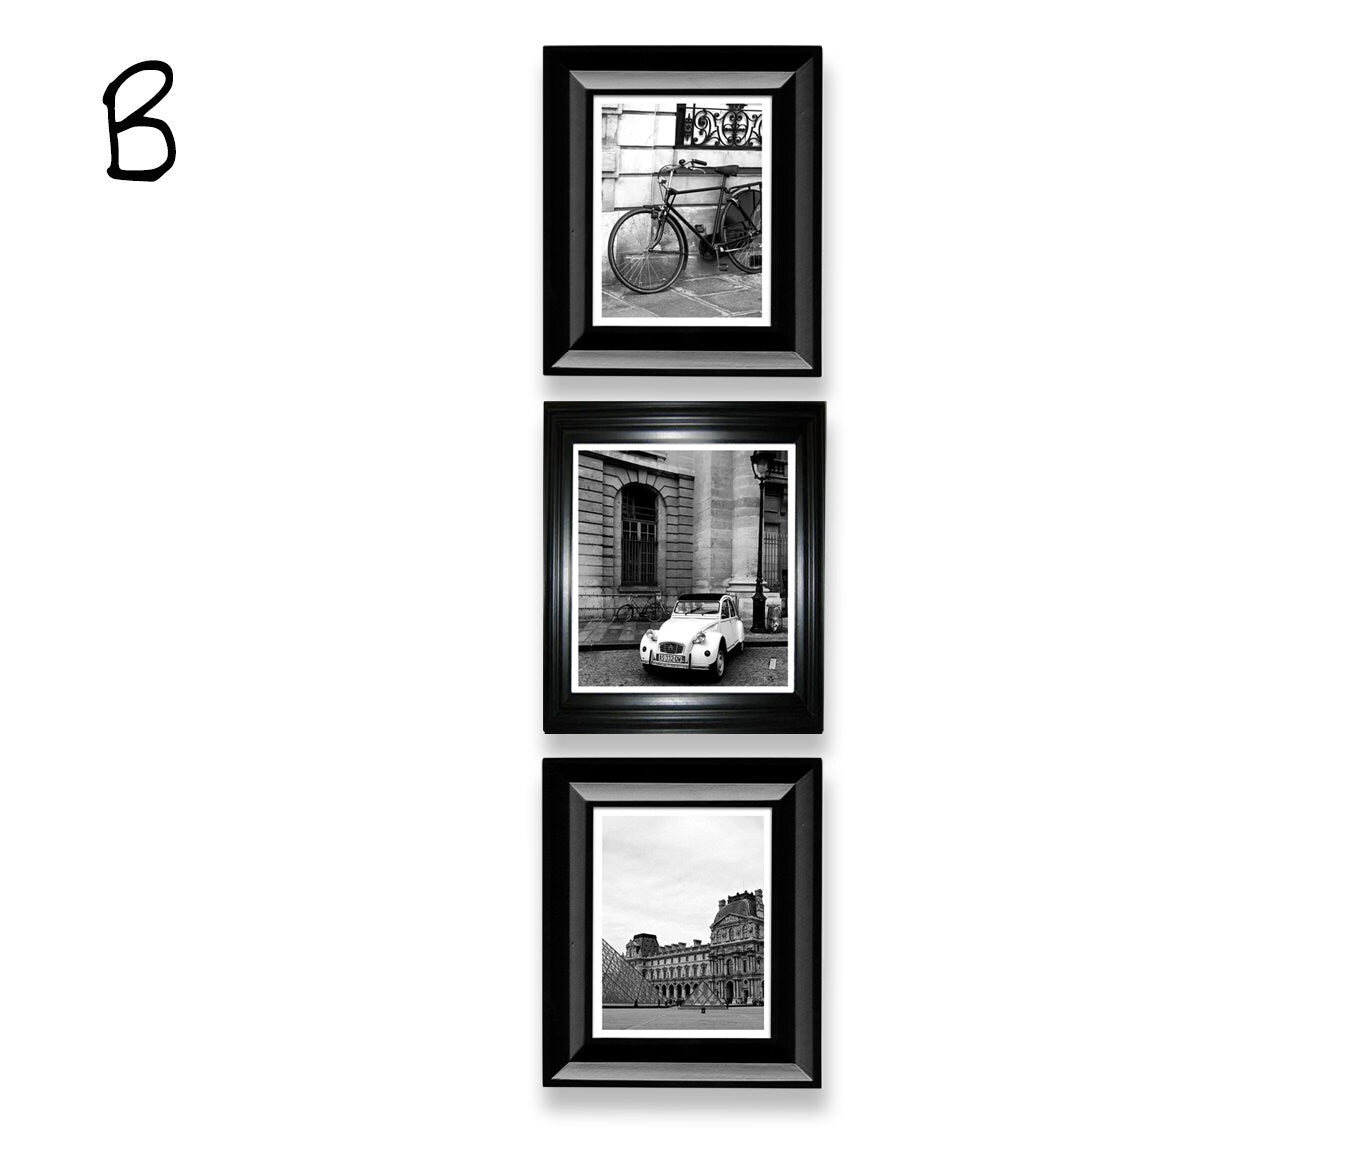 How to Arrange Three Photo Frames on a Wall